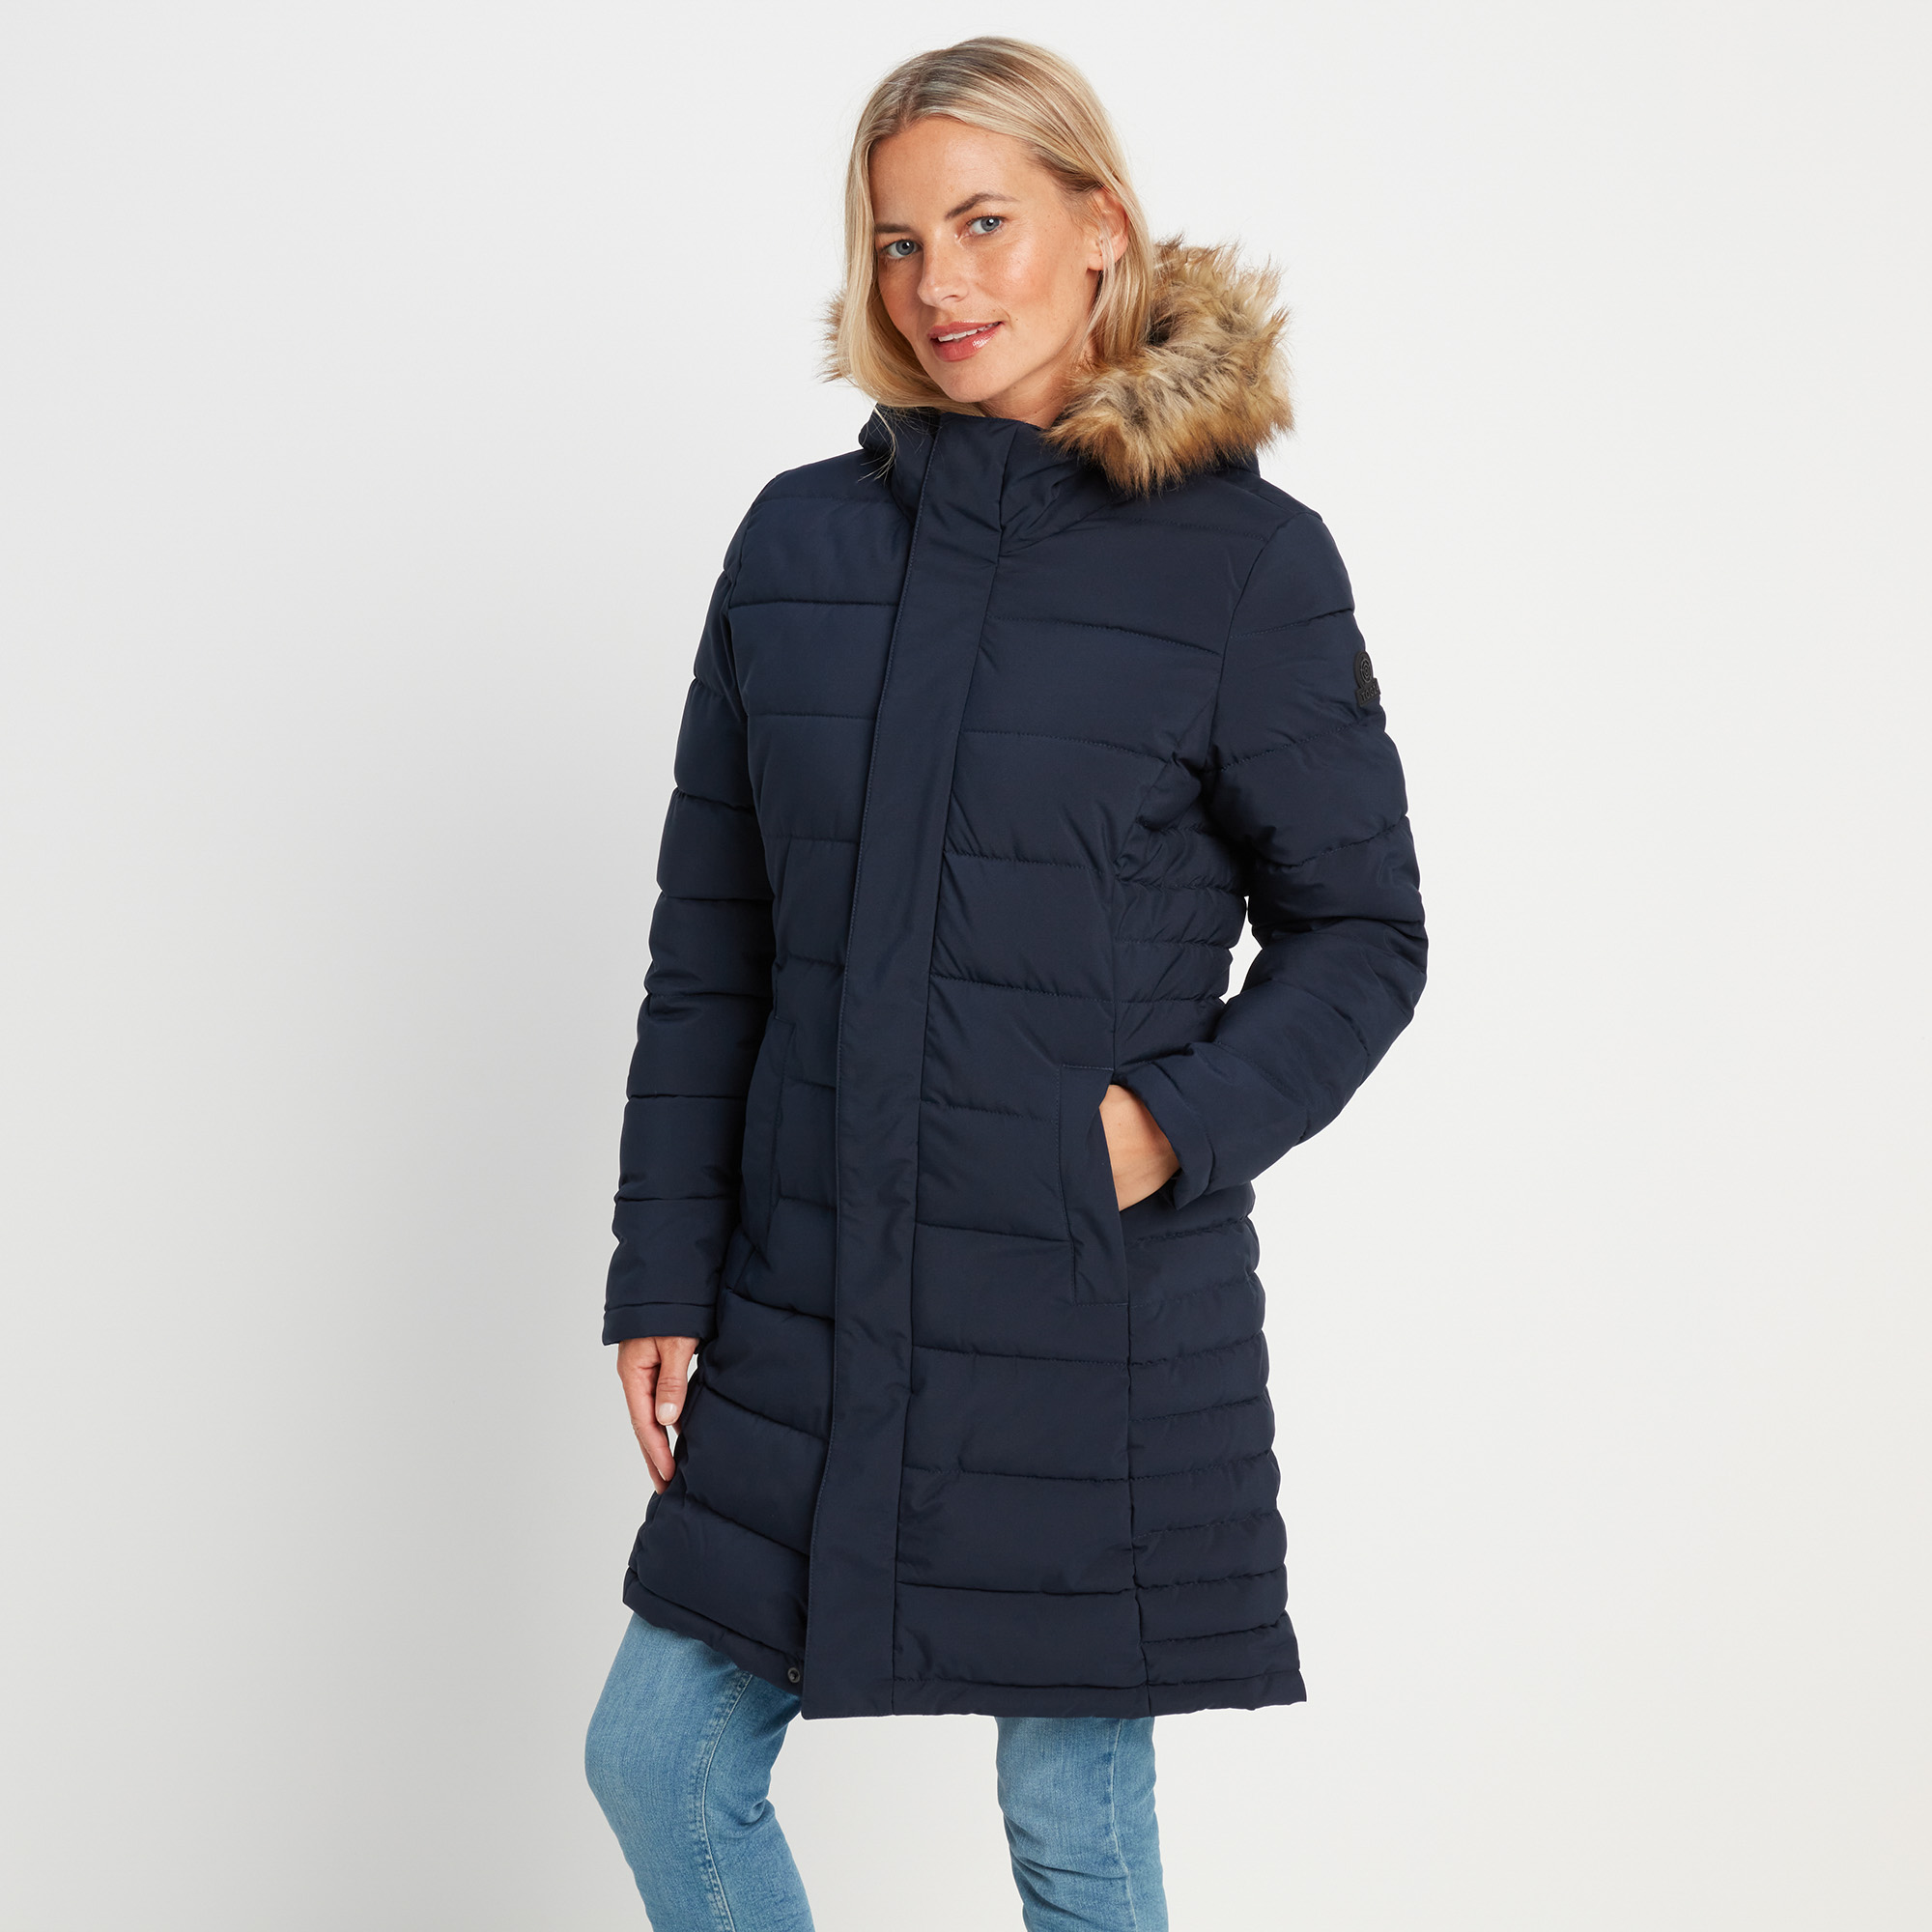 TOG24 Firbeck Womens Long Length Jacket Parka Winter Rain Resistant ...